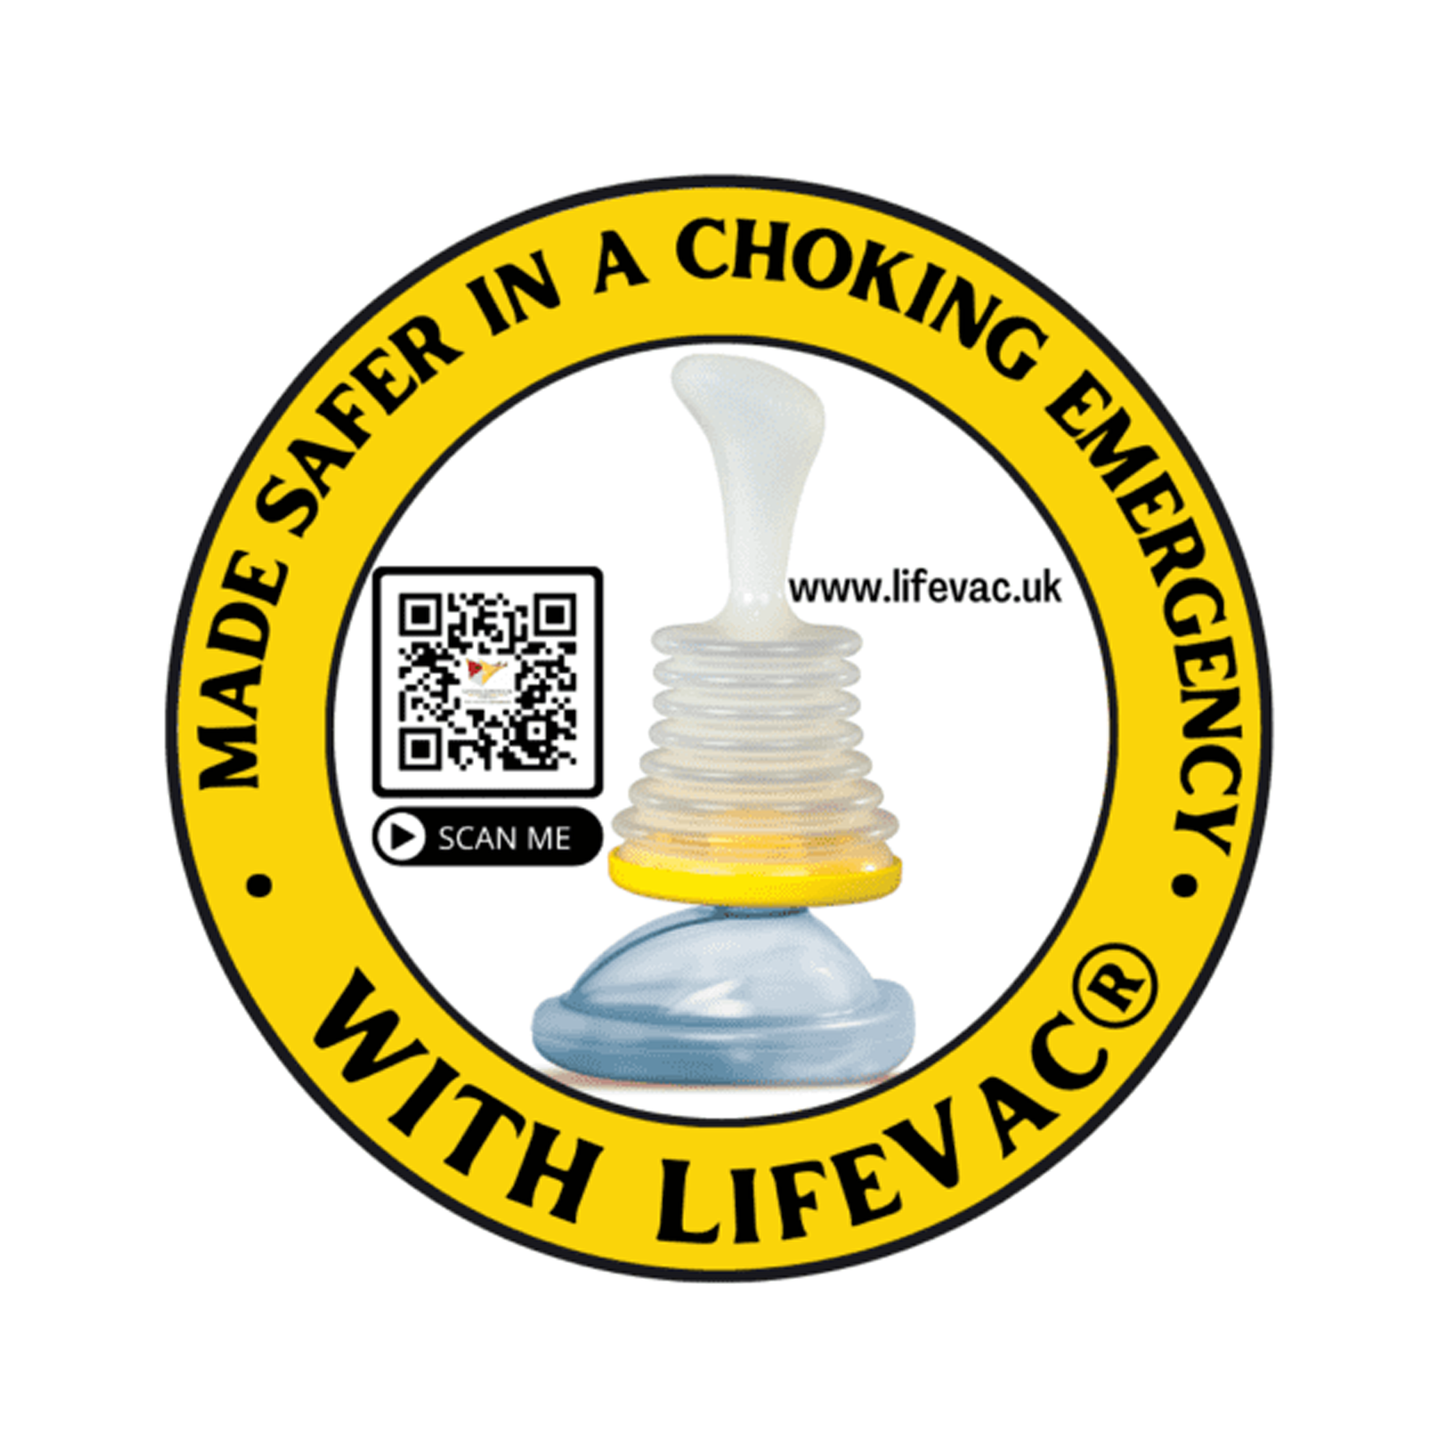 LifeVac Anti-choking Home Kit